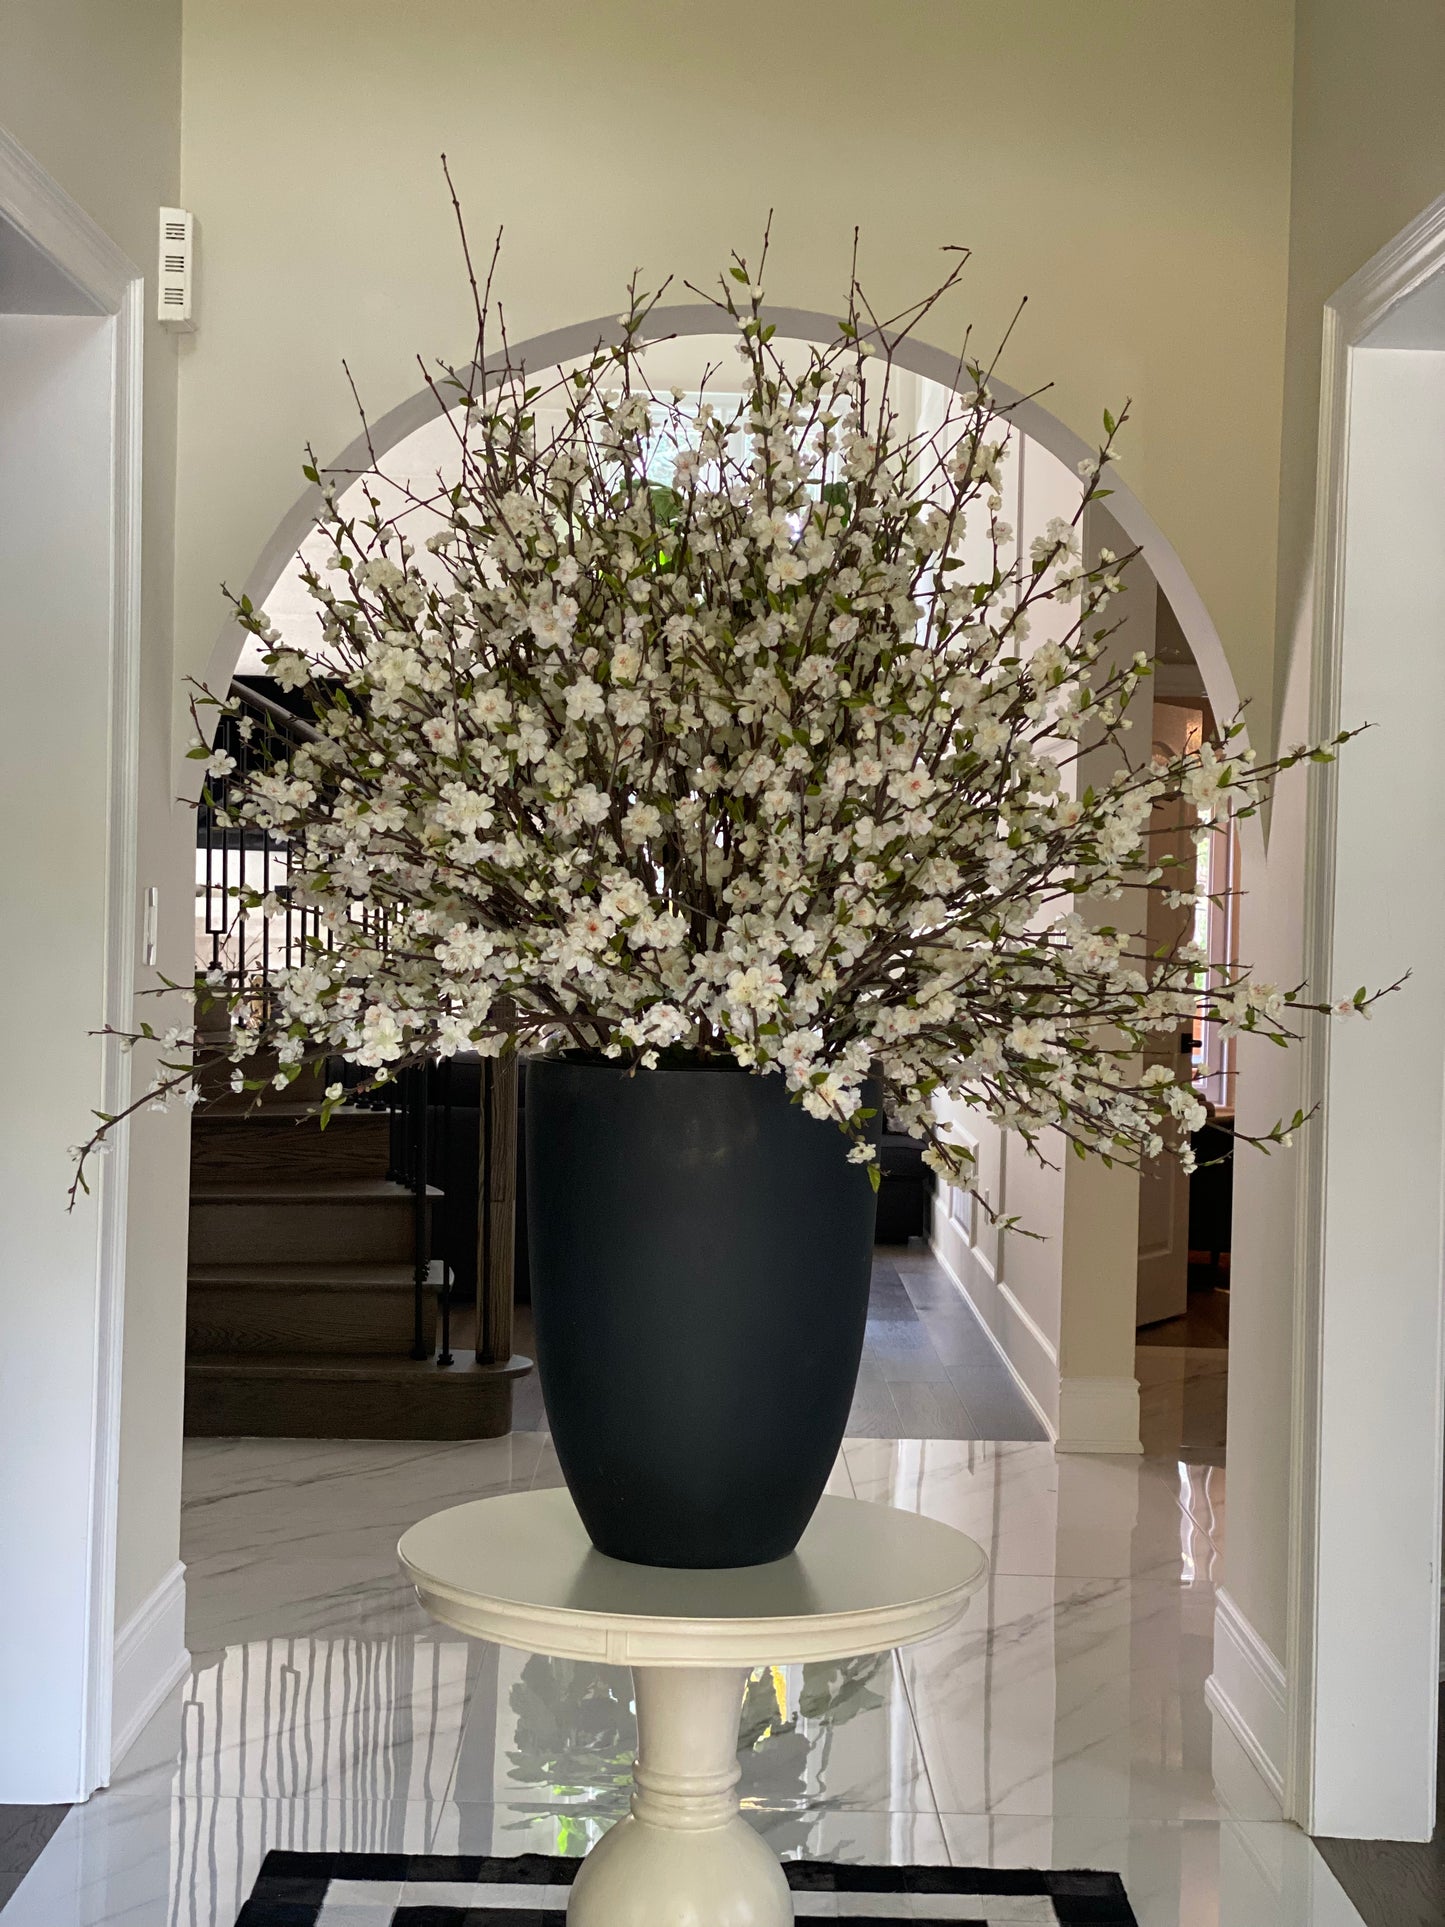 Cherry Blossom Vase Arrangement